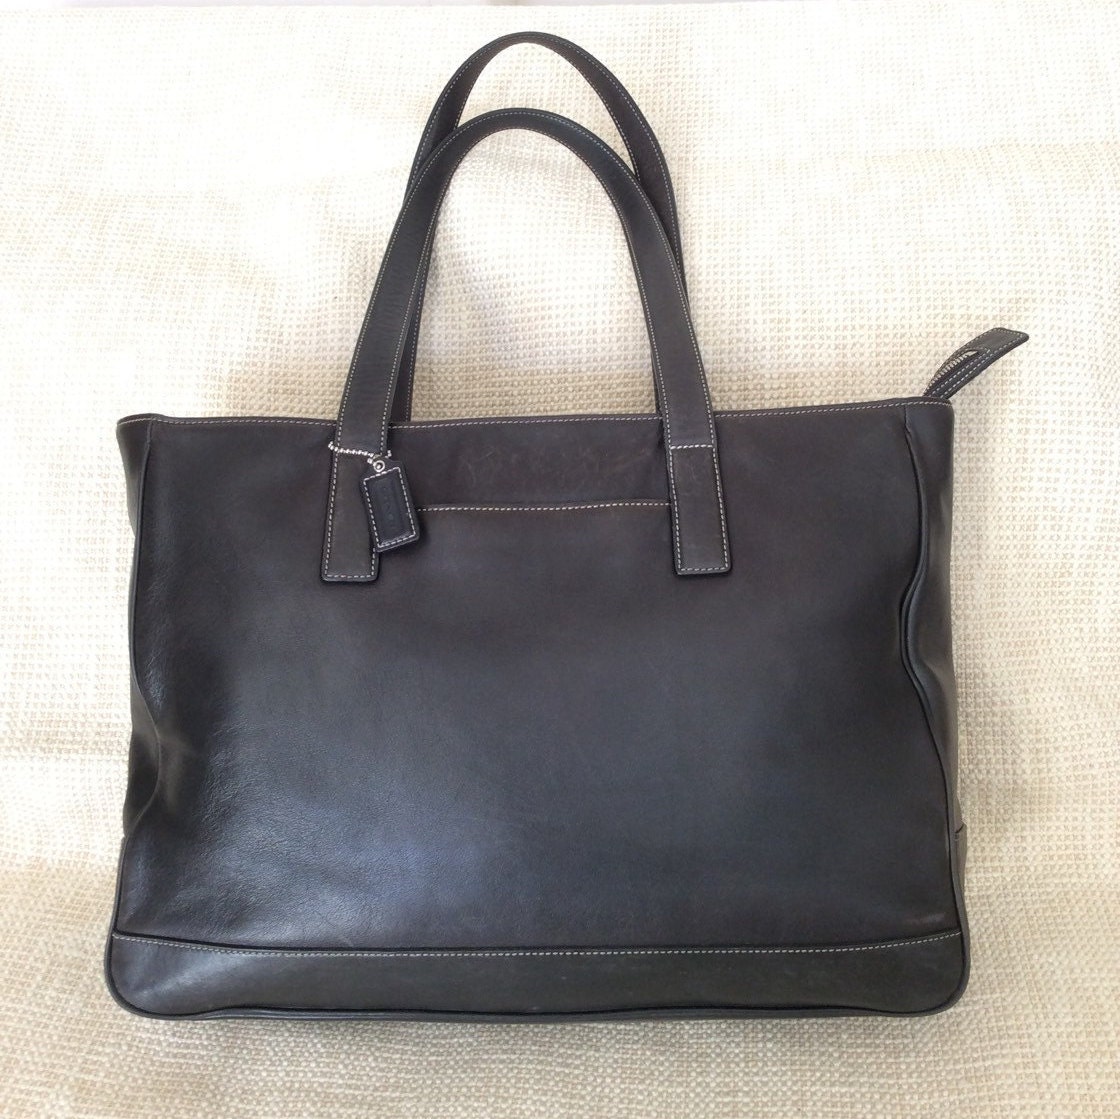 Genuine vintage COACH black leather tote business bag large